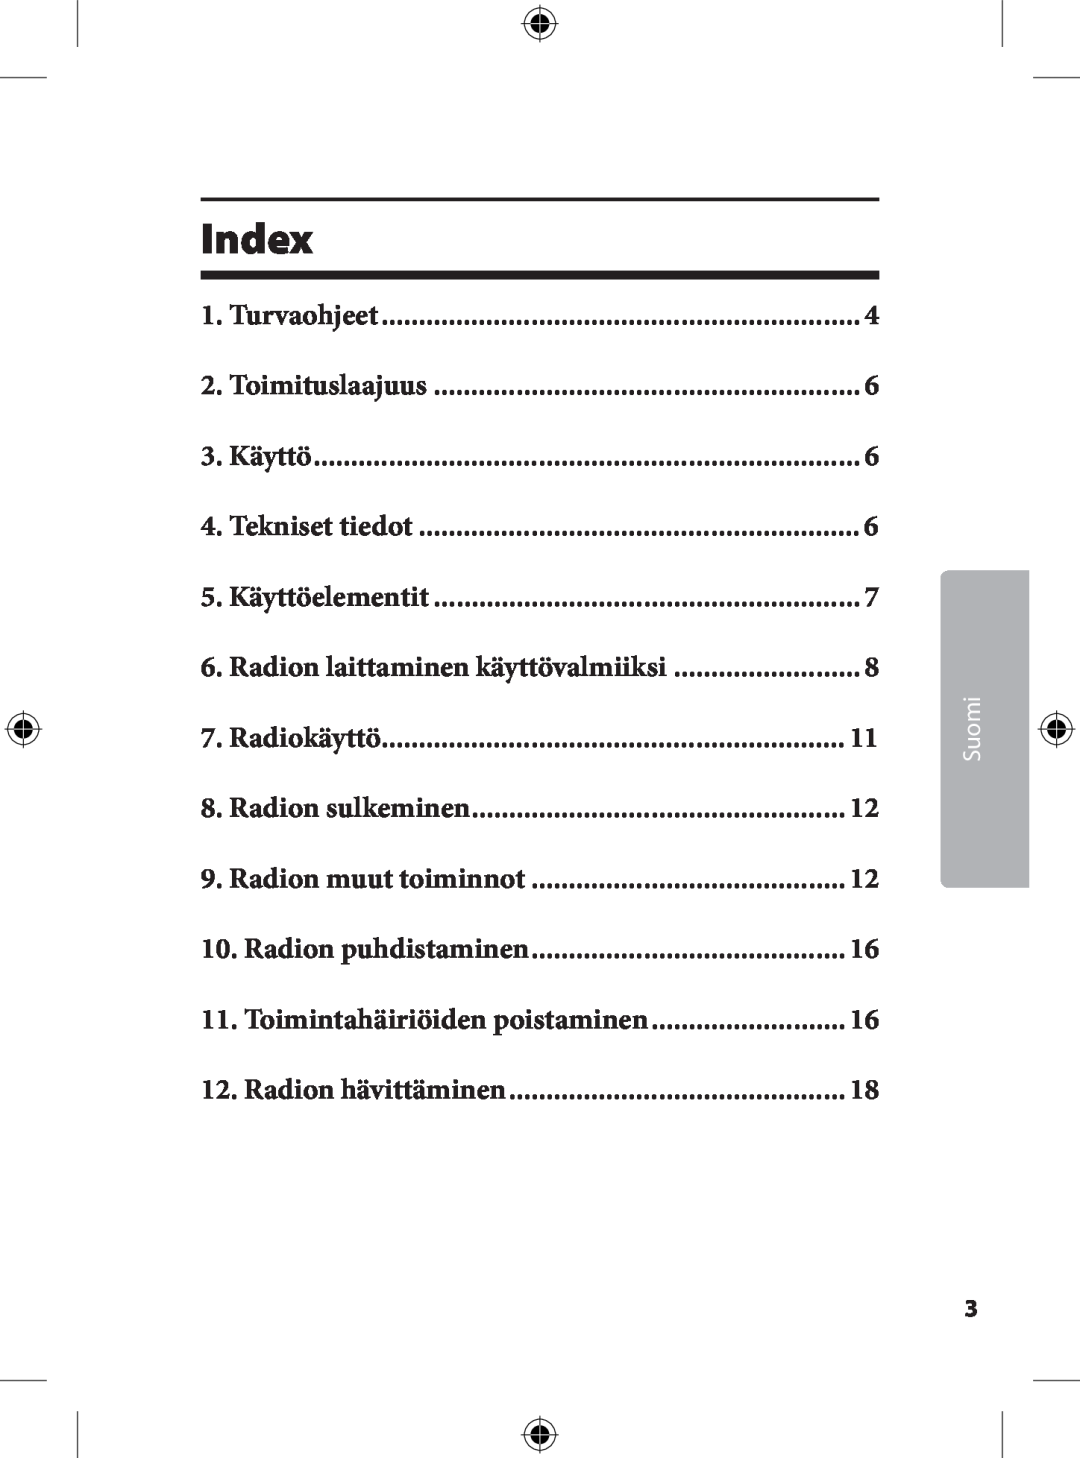 Kompernass KH 2246 manual Index 